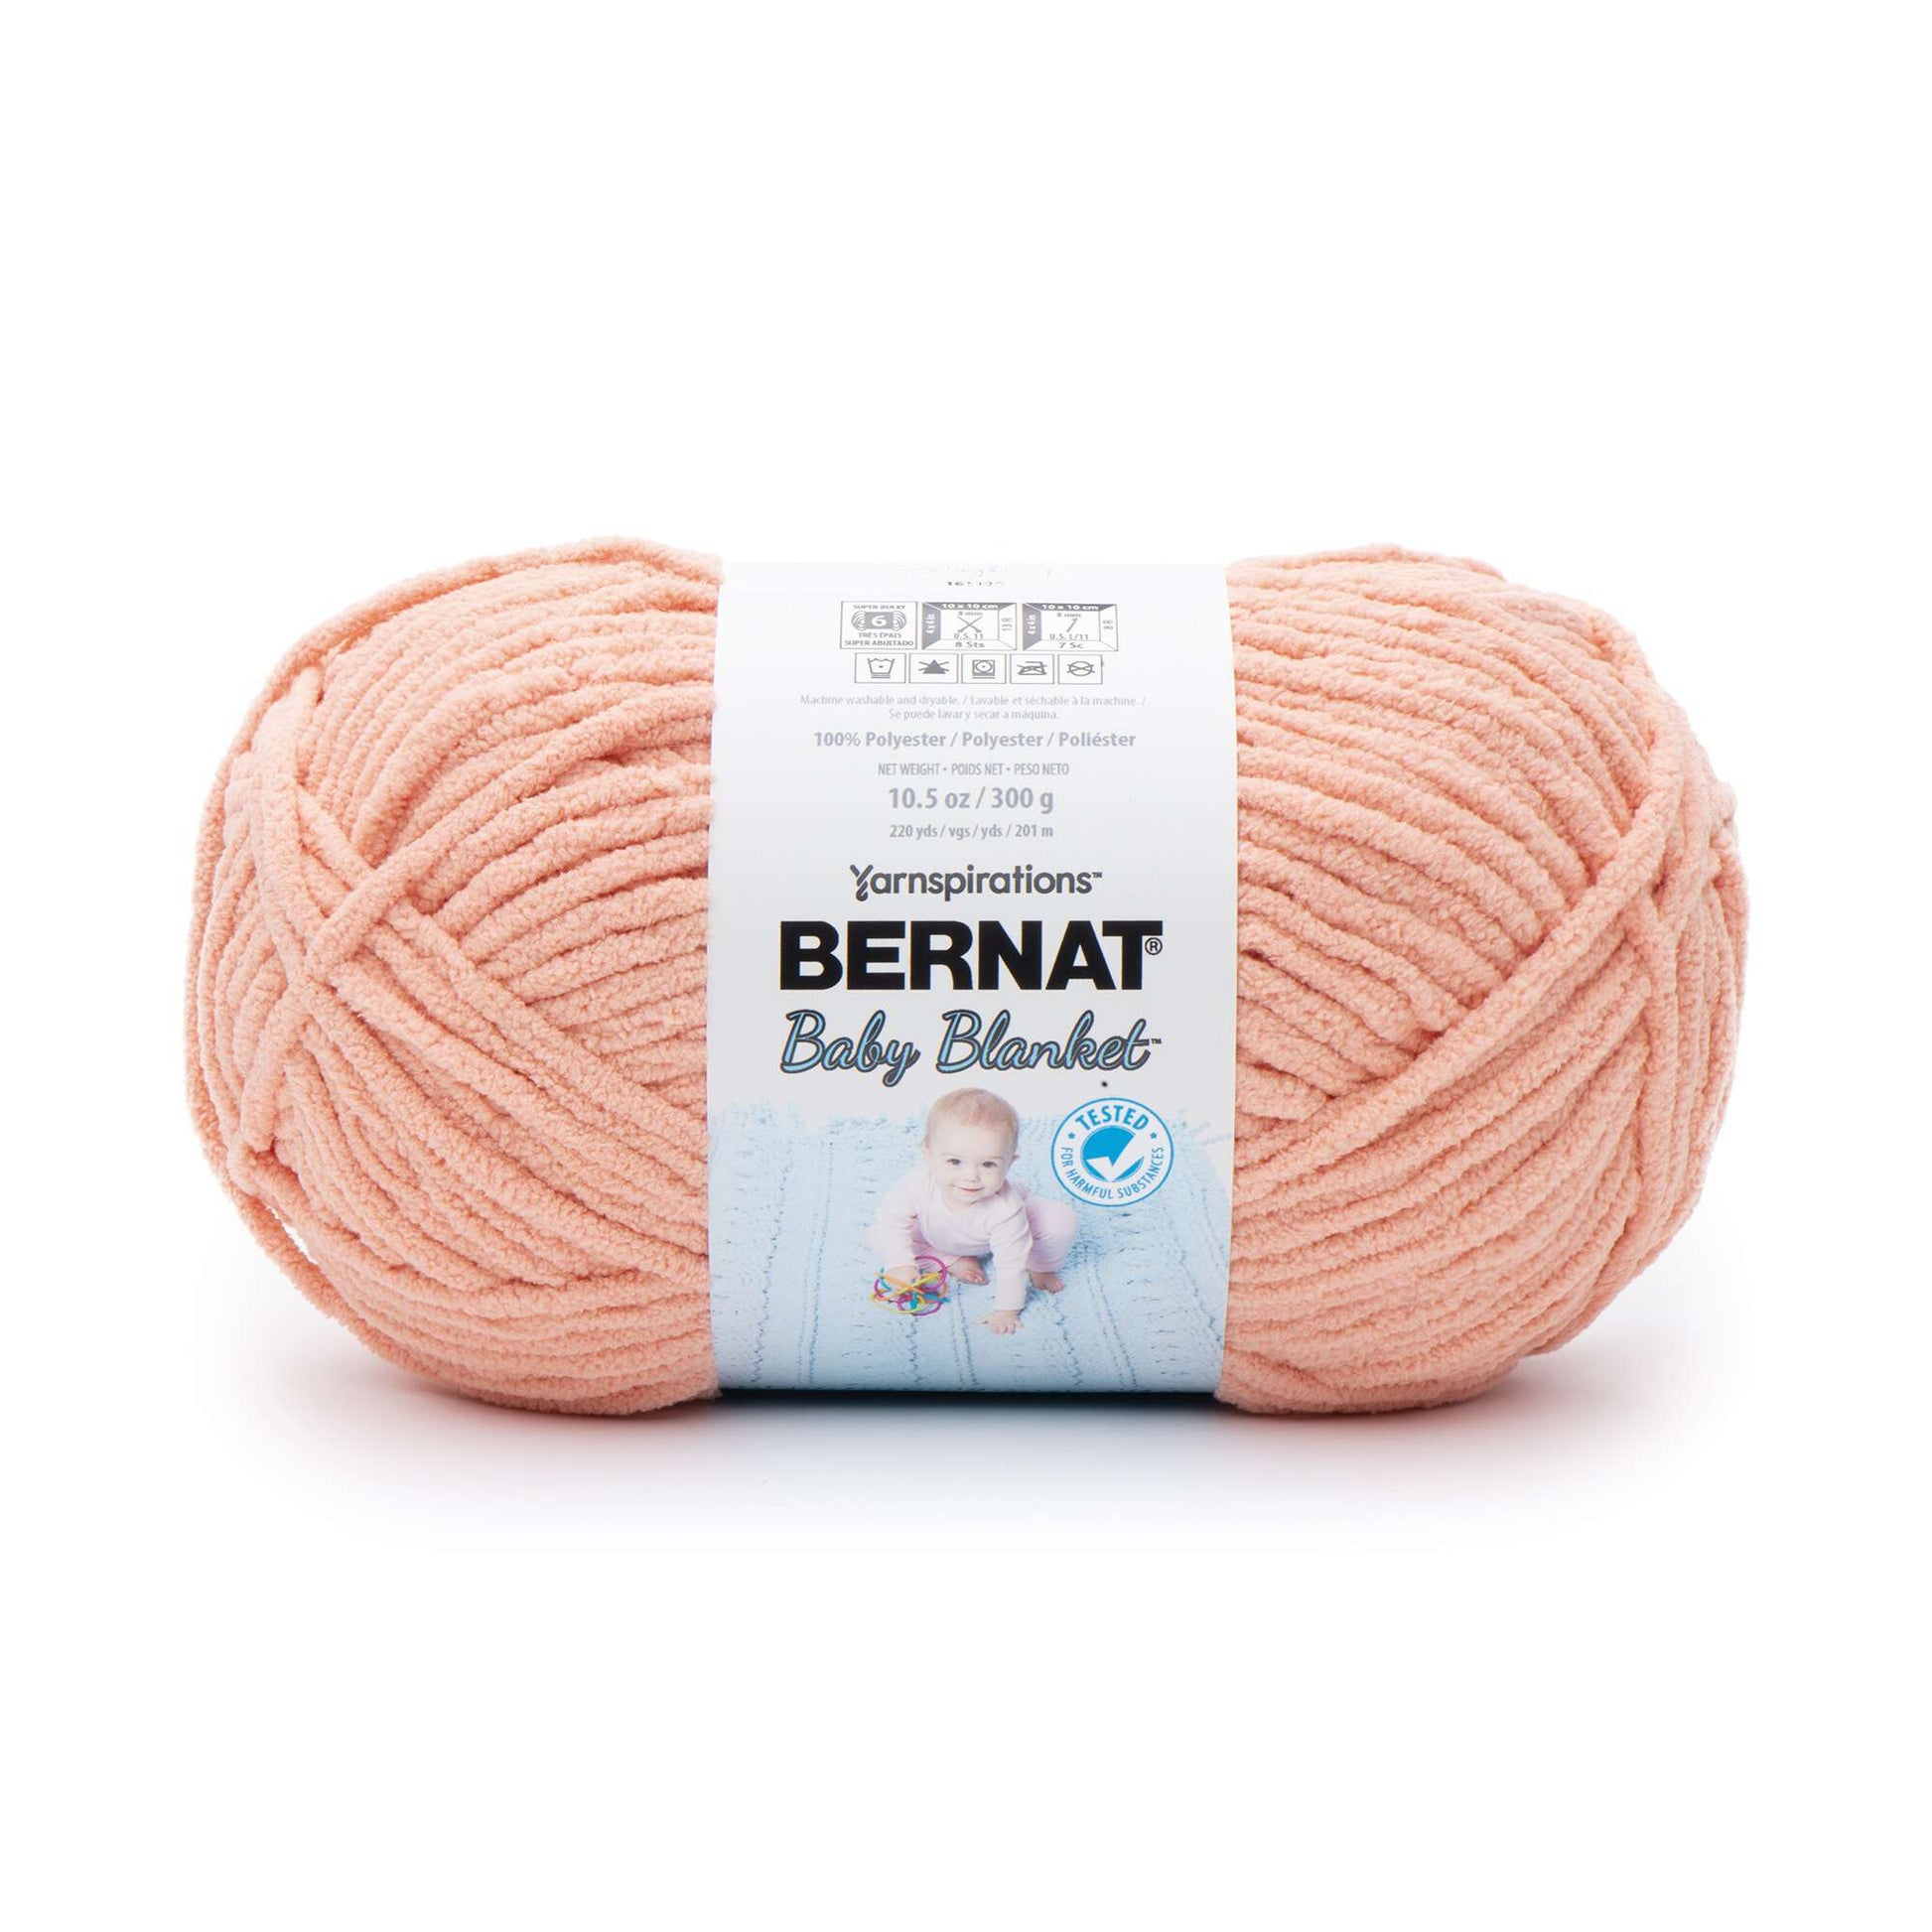 Bernat Baby Blanket Twists Yarn